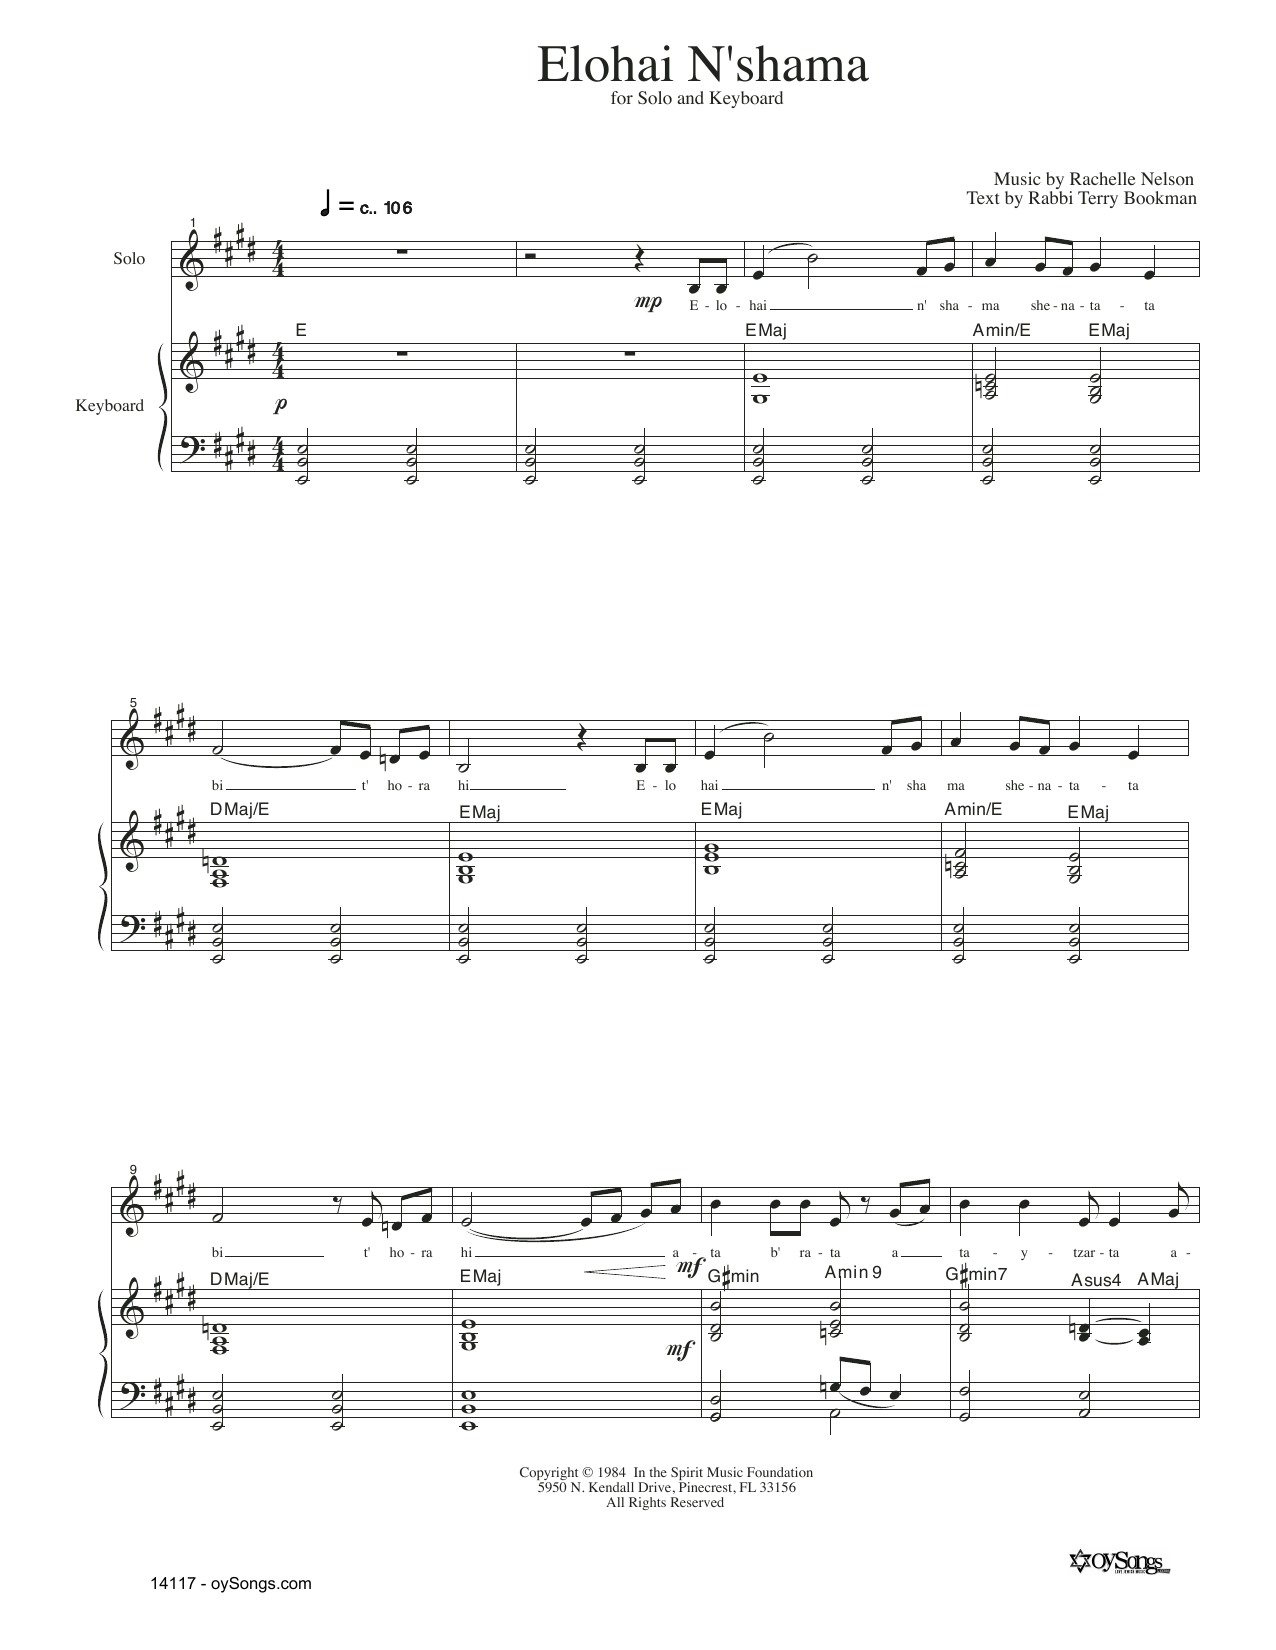 Download Rachelle Nelson Elohai N'shama Sheet Music and learn how to play SATB Choir PDF digital score in minutes